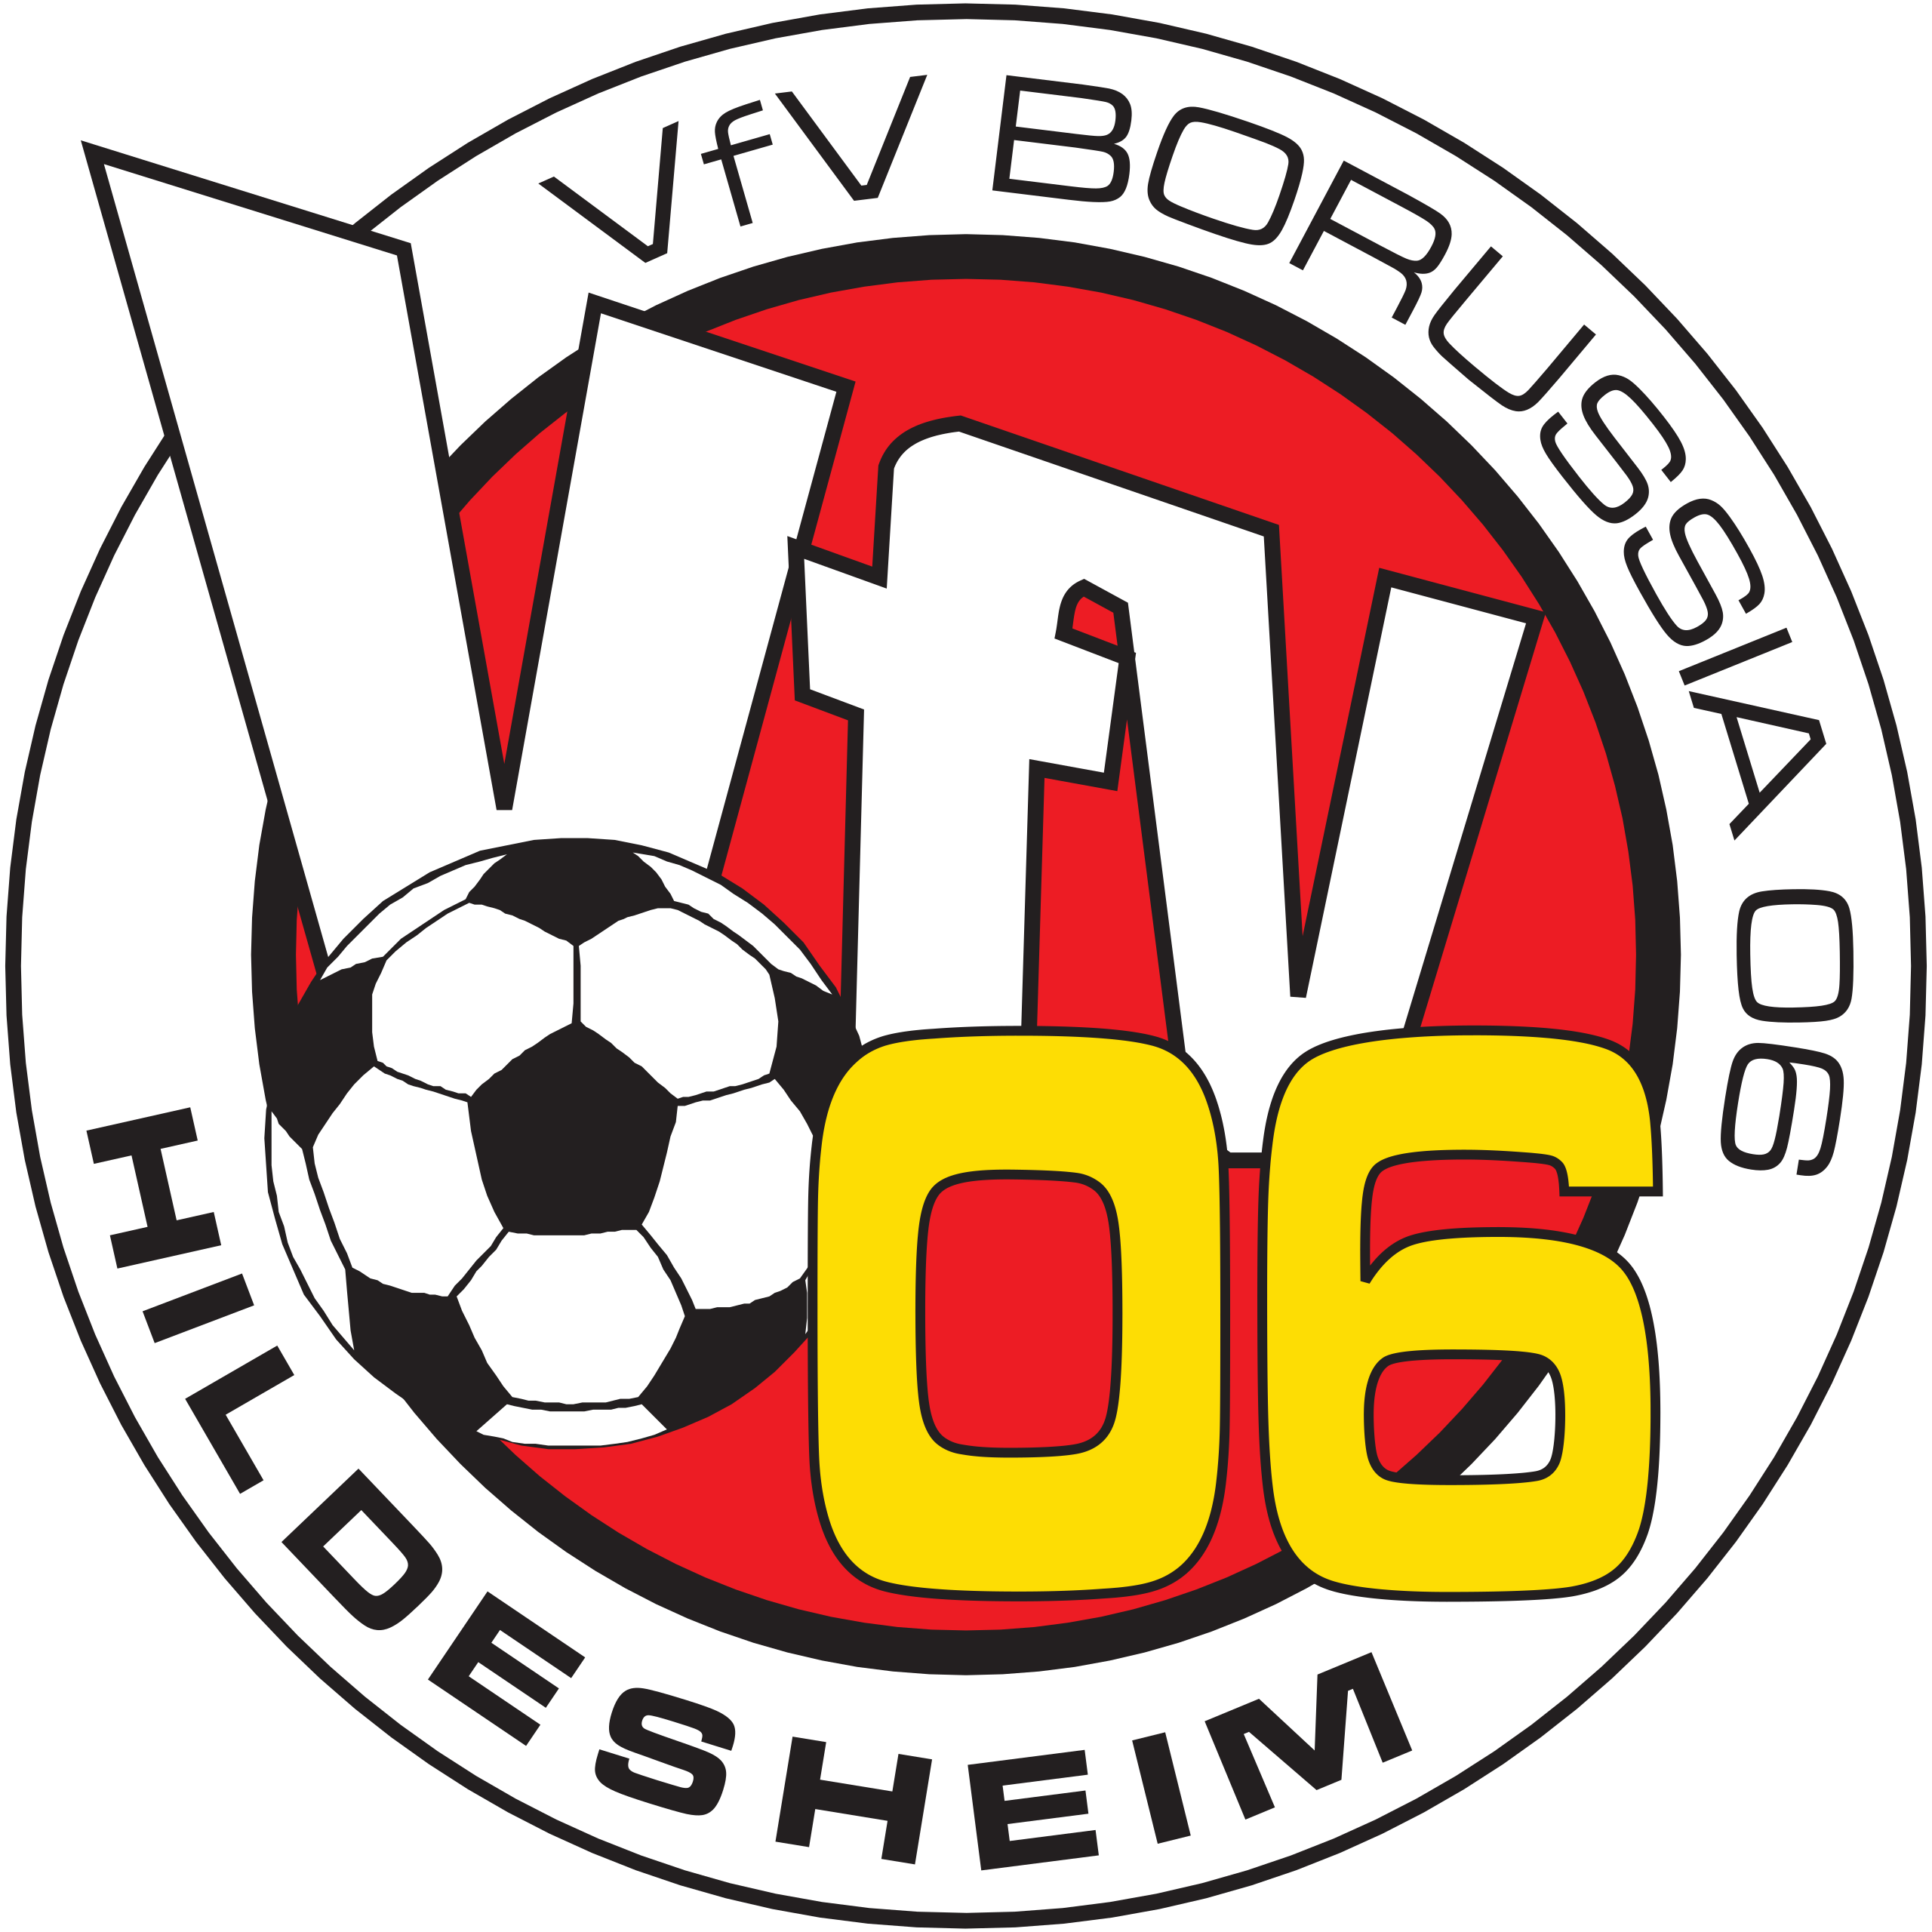 Logo VfV 06 Hildesheim